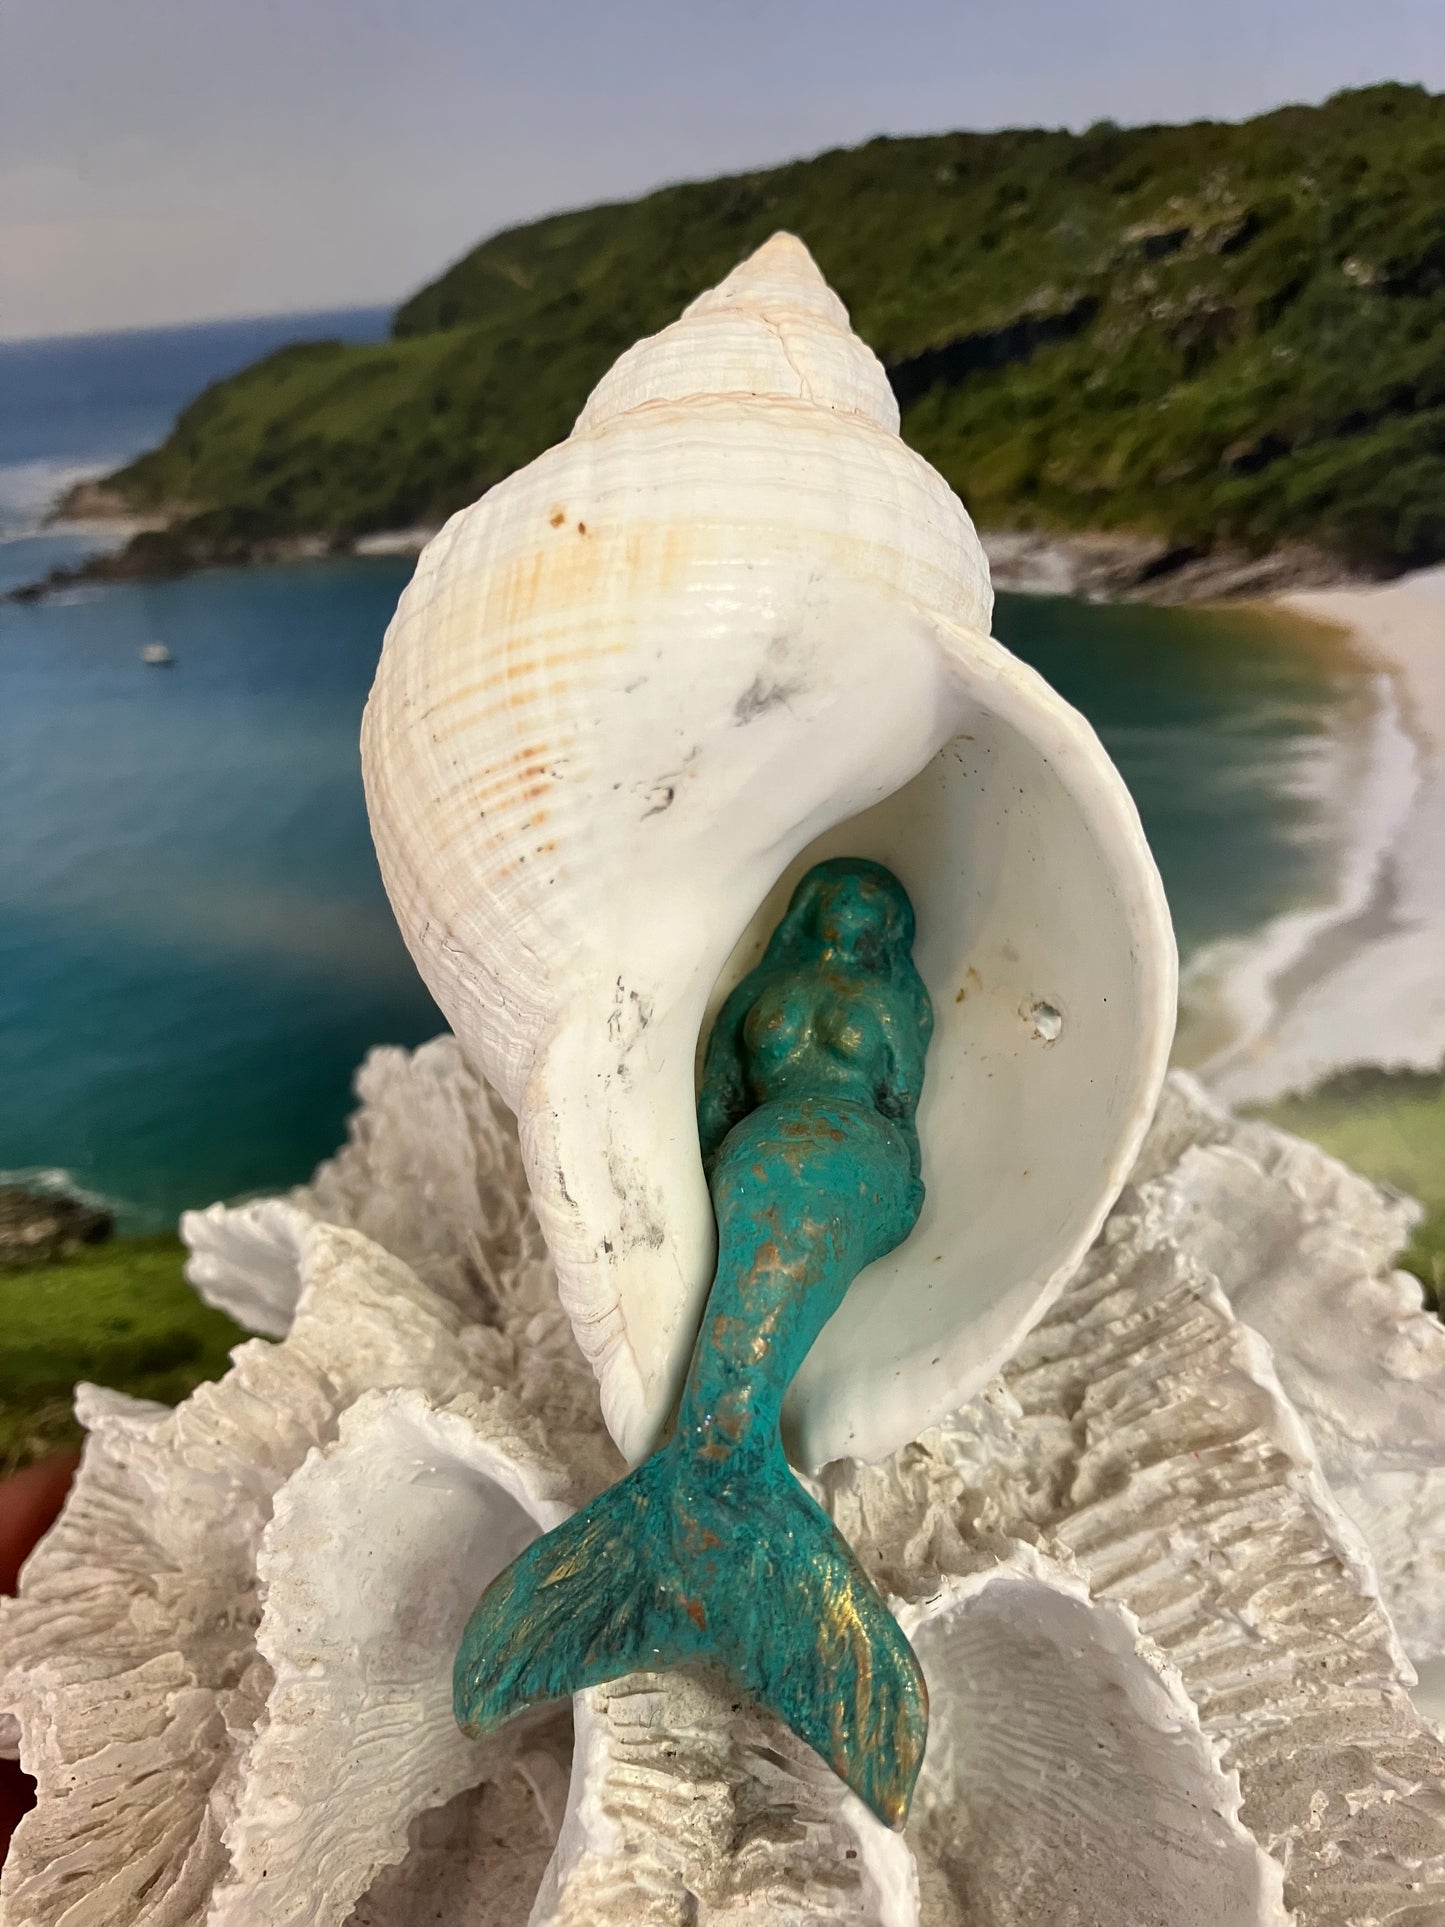  Mermaid Sleeping on Seashell Figurine with Pearl Shell